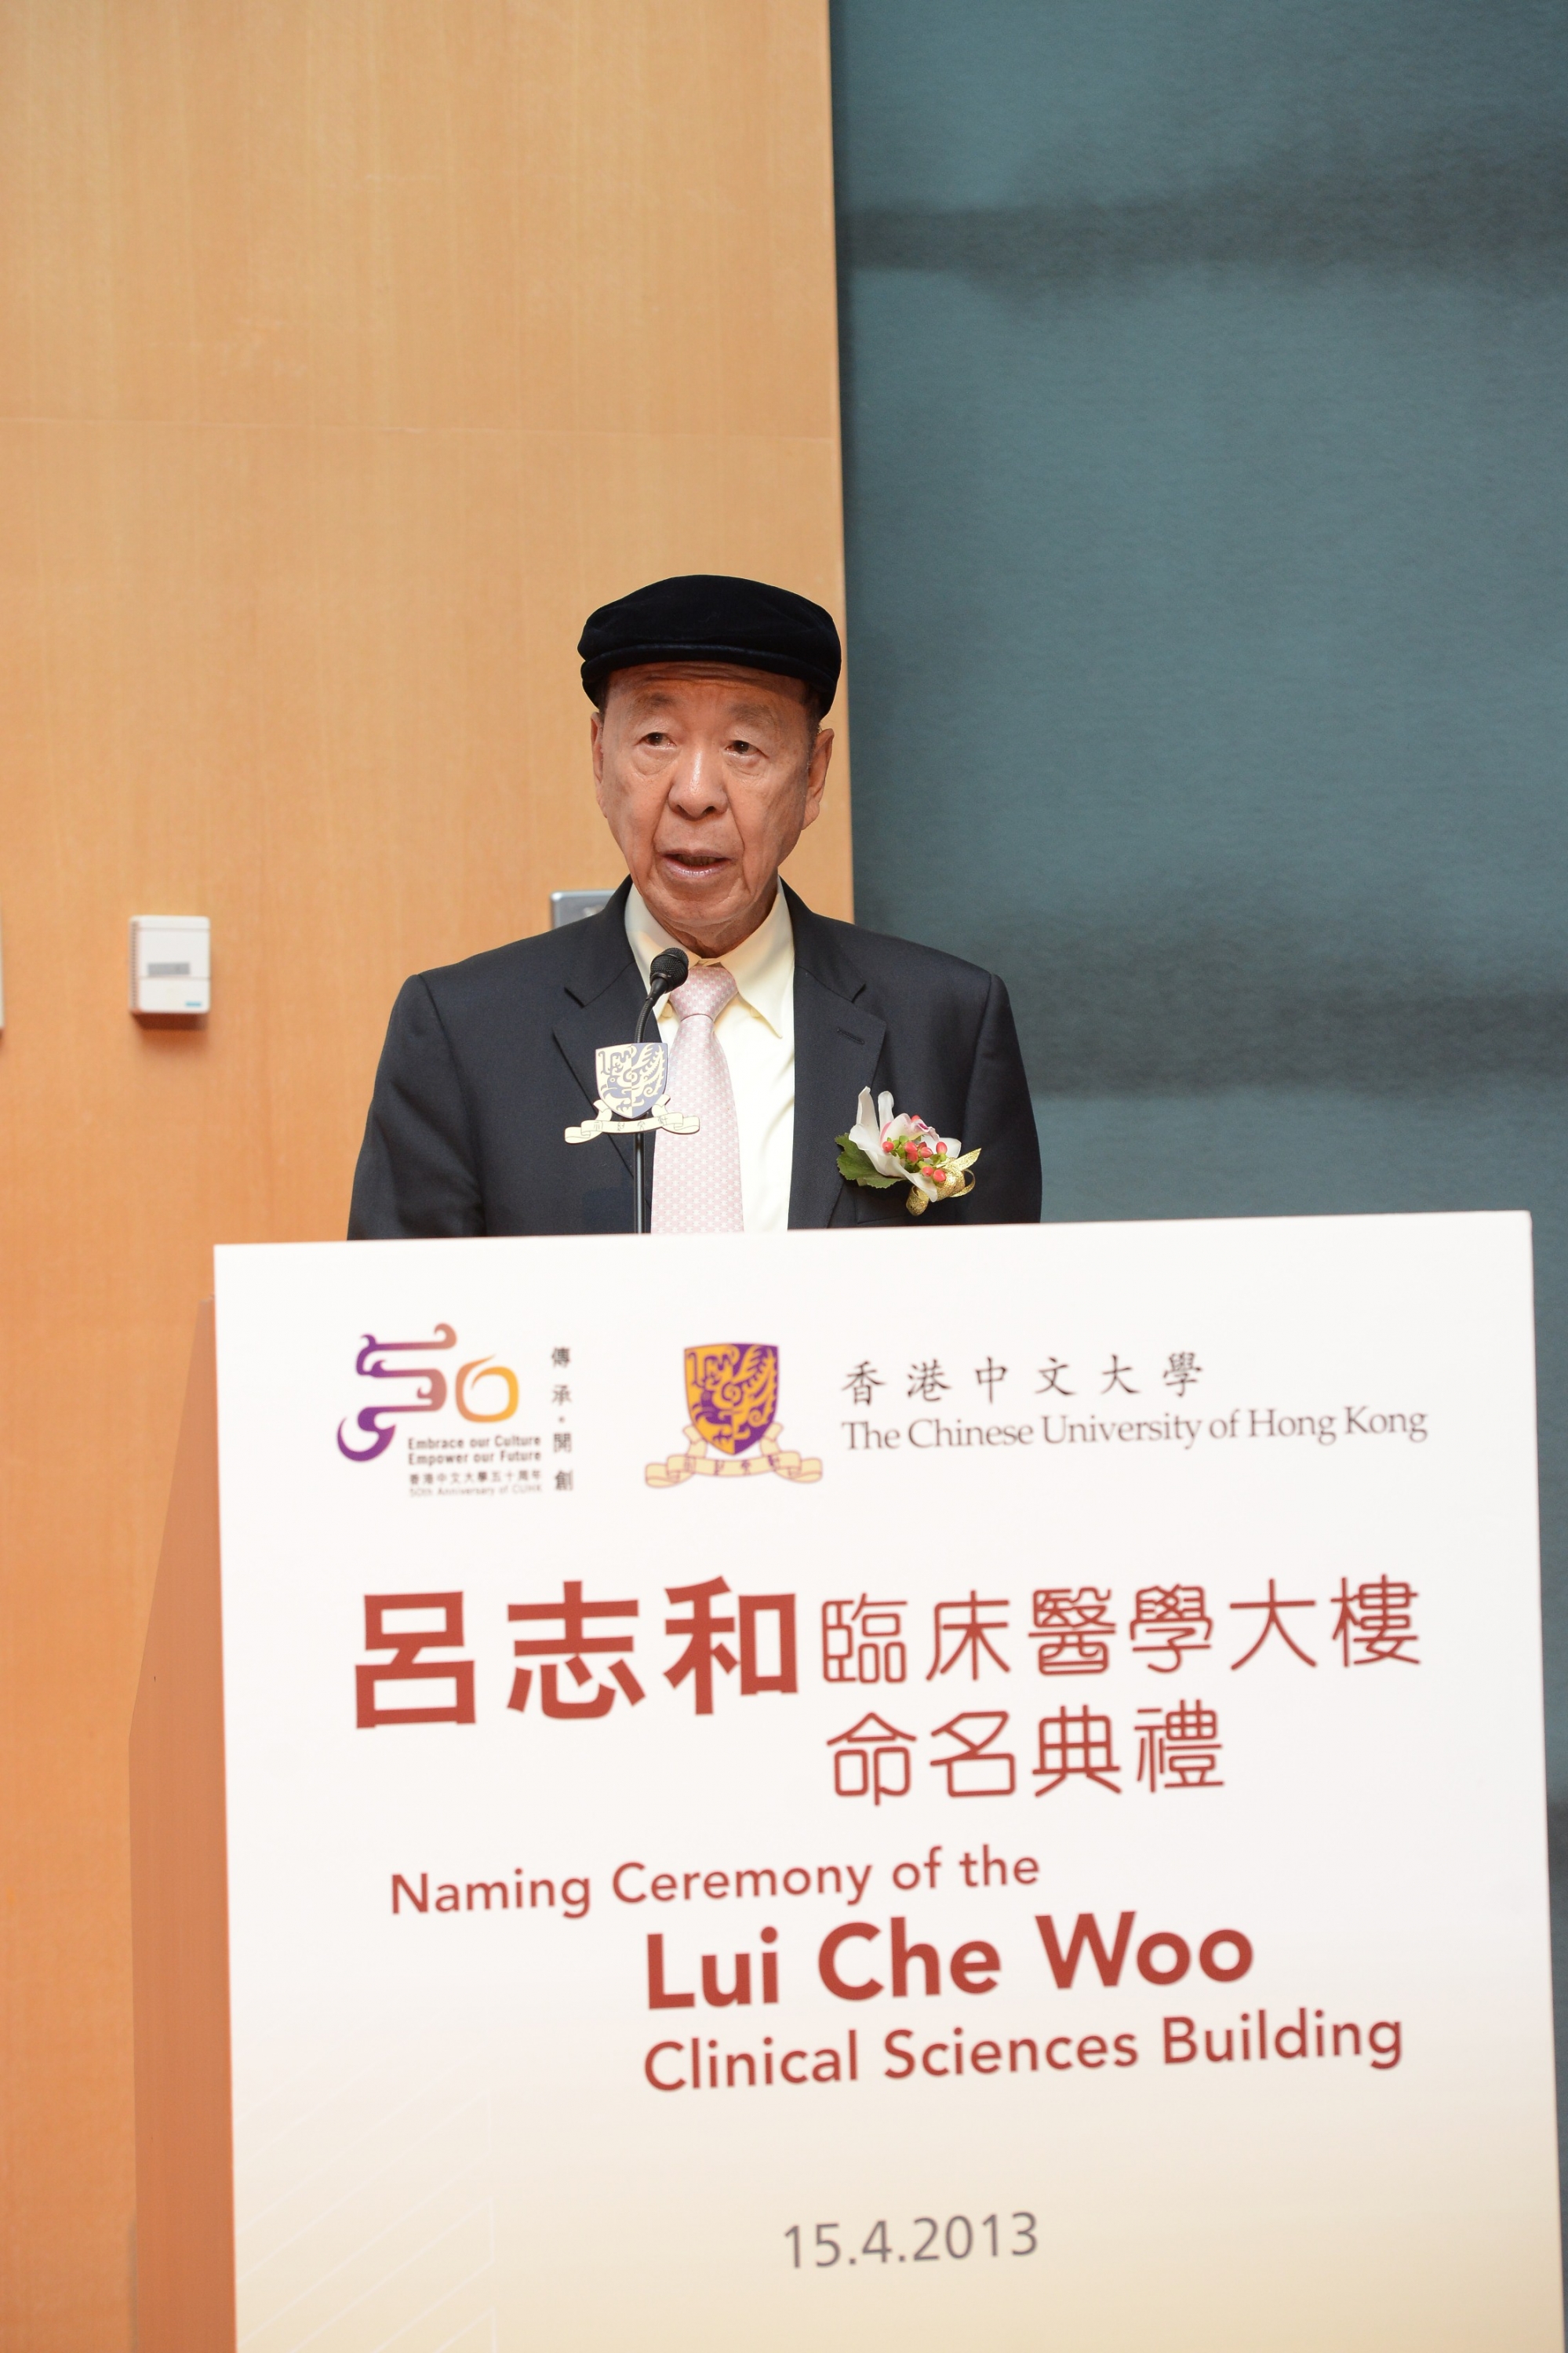 Dr. Lui Che Woo delivers a speech.